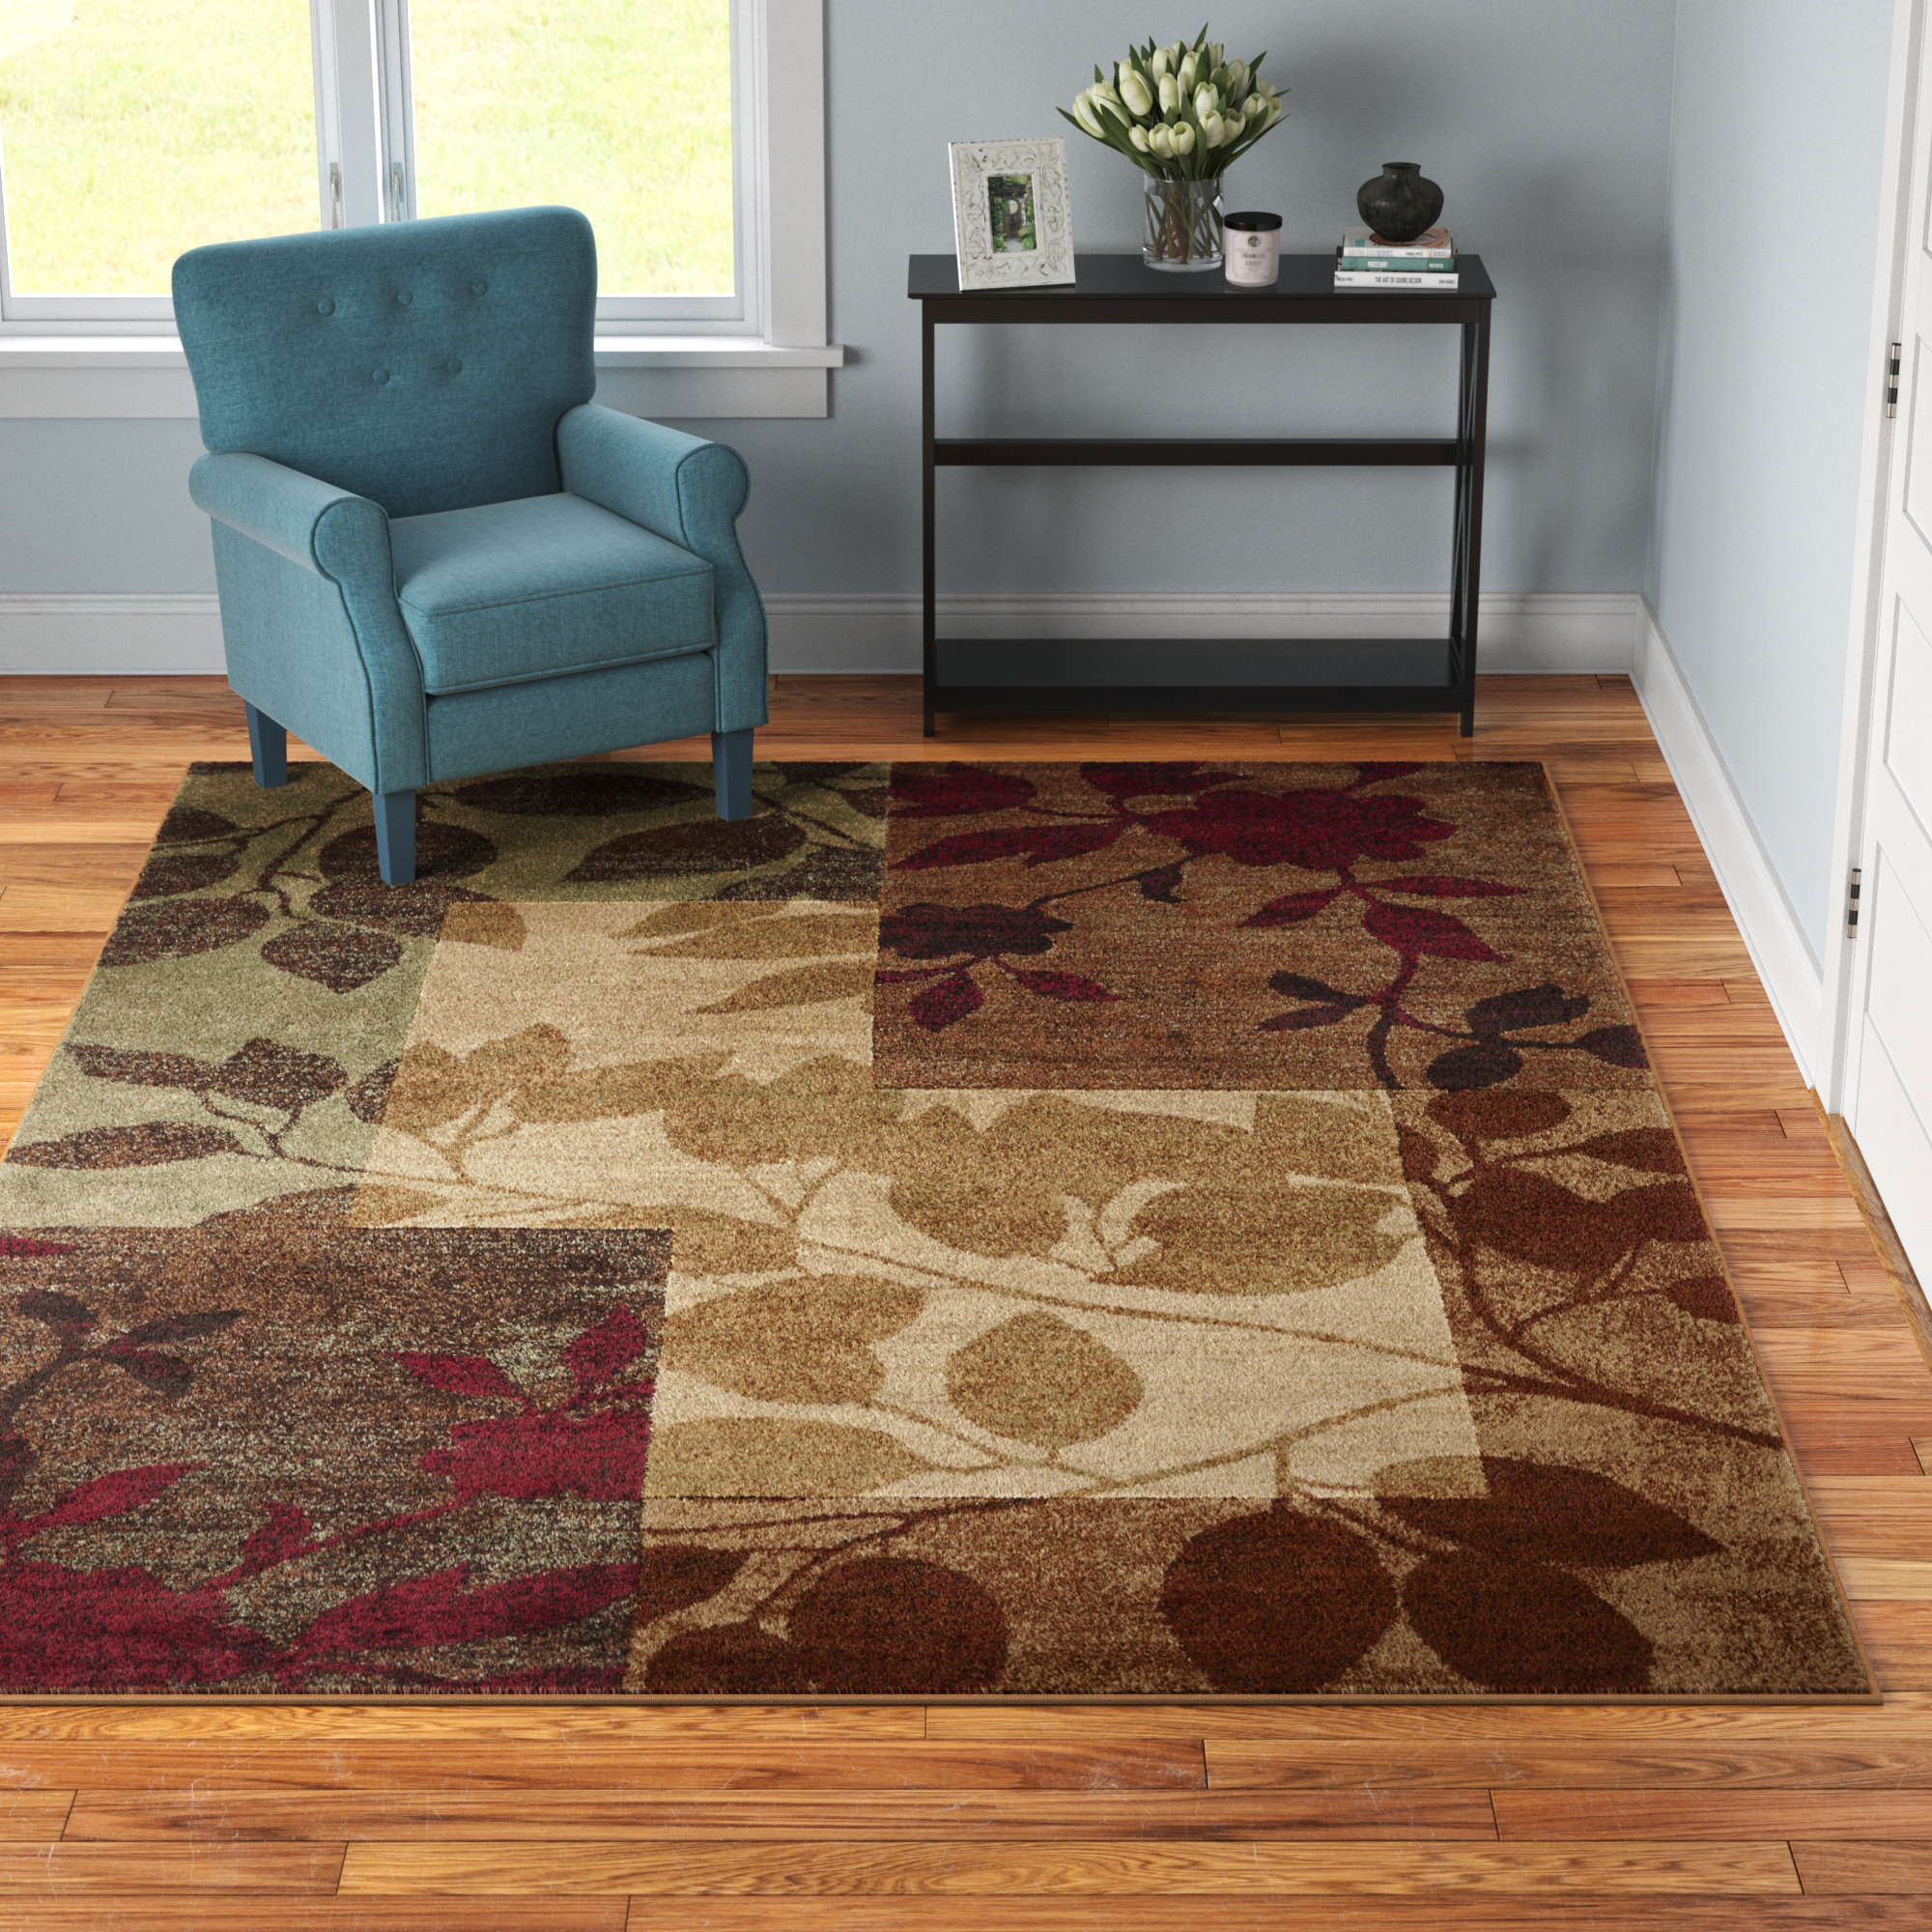 Supreme luxury brand 13 area rug carpet living room and bedroom mat